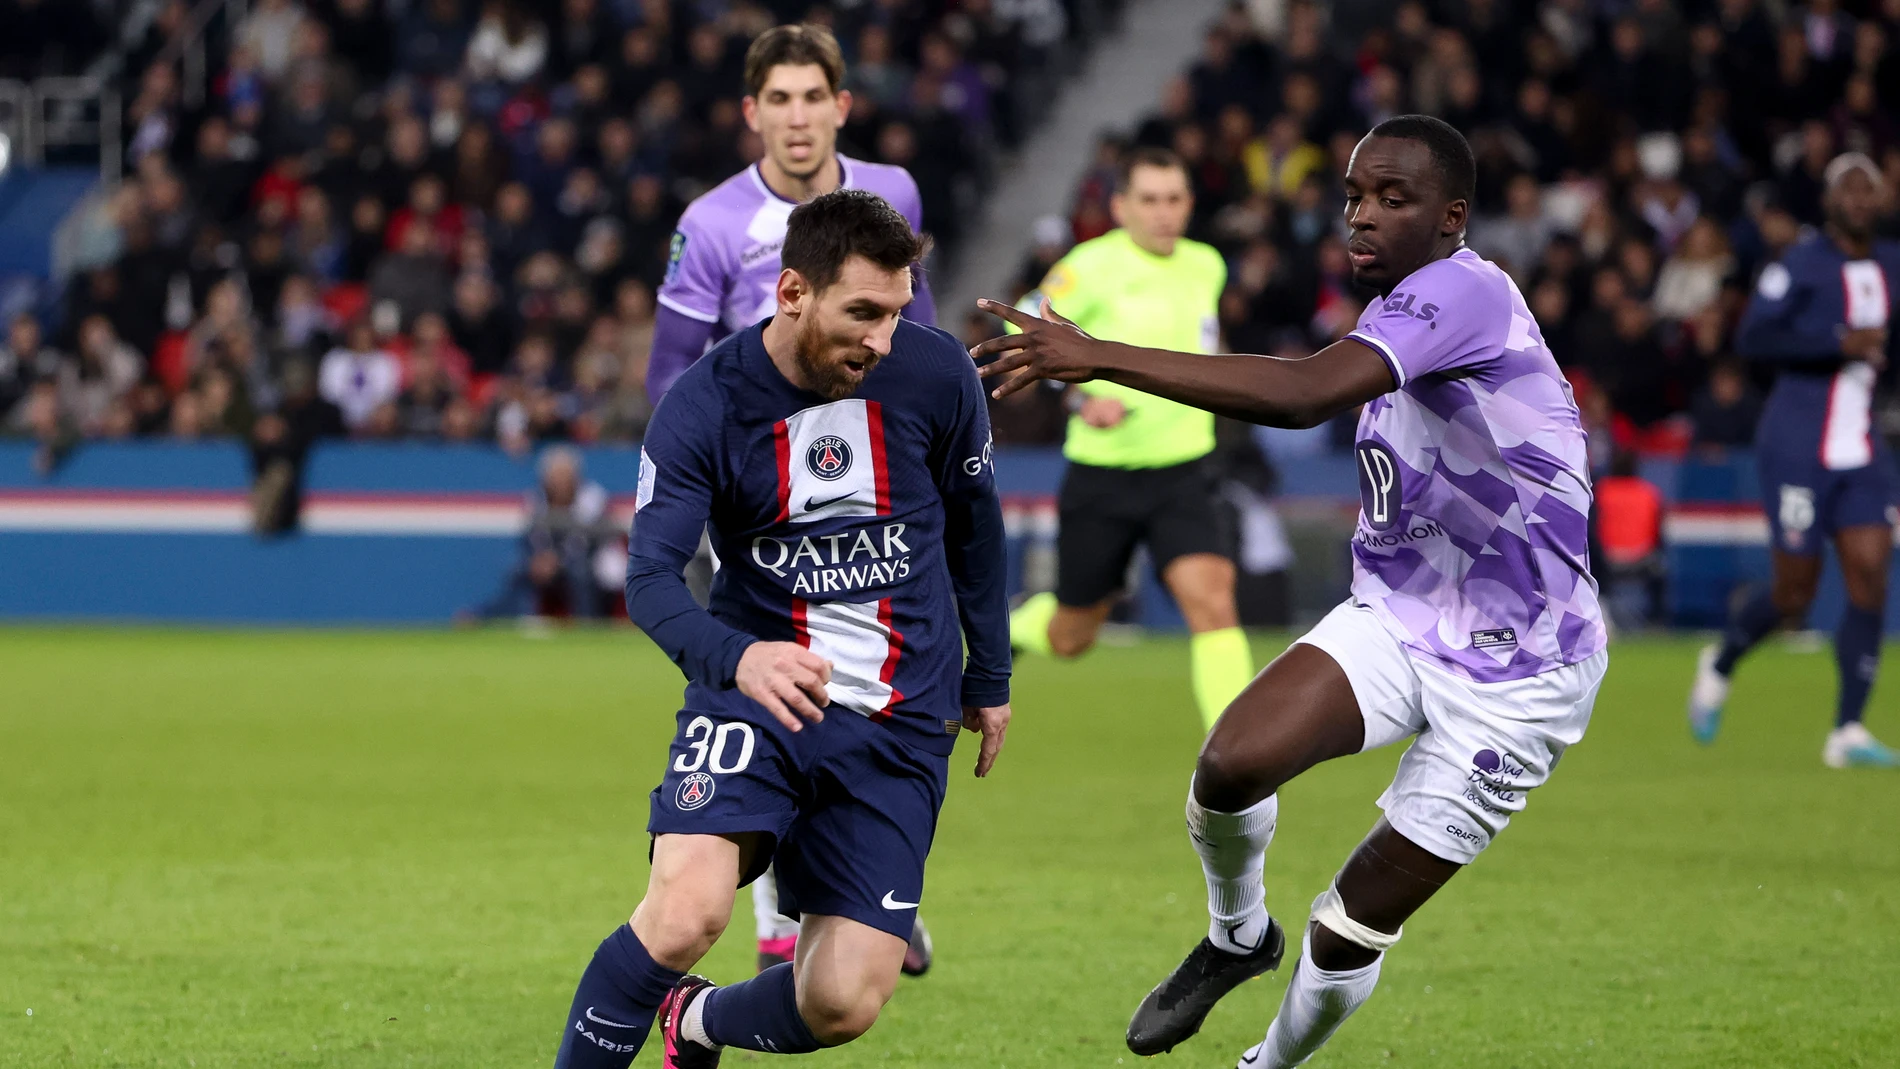 Messi elude la defensa de Moussa Diarra